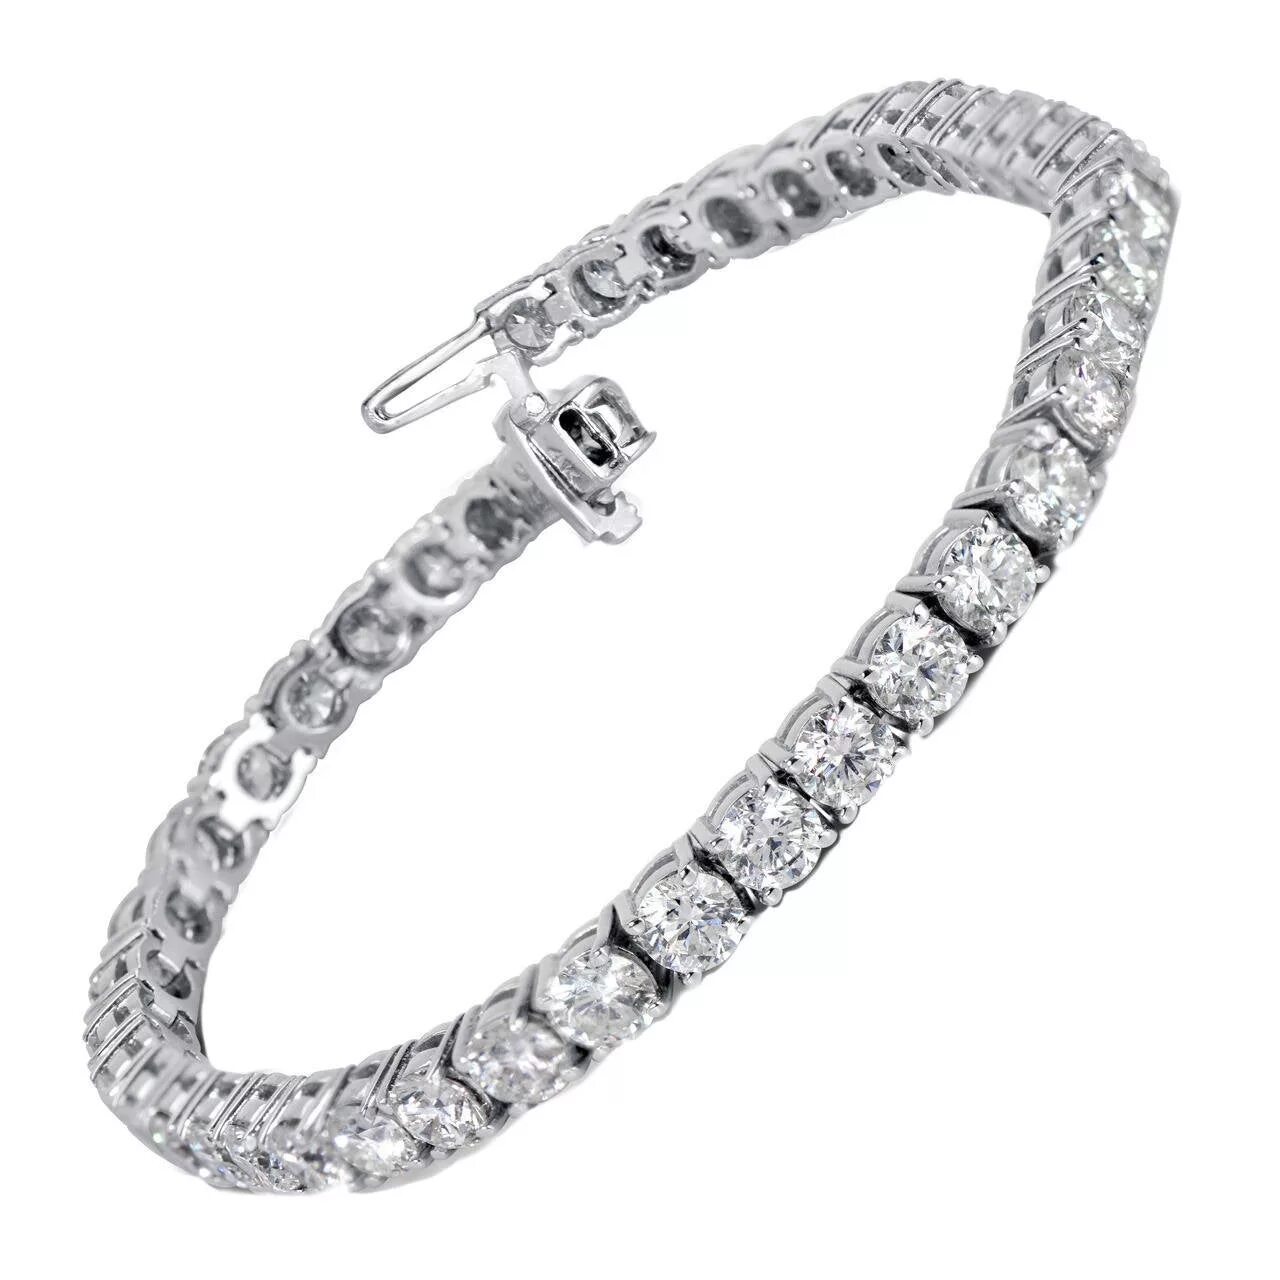 Tennis Bracelet Diamond. Gianni Lazzaro кольцо Diamonds. Браслет 7309532. Теннисный браслет first class diamonds